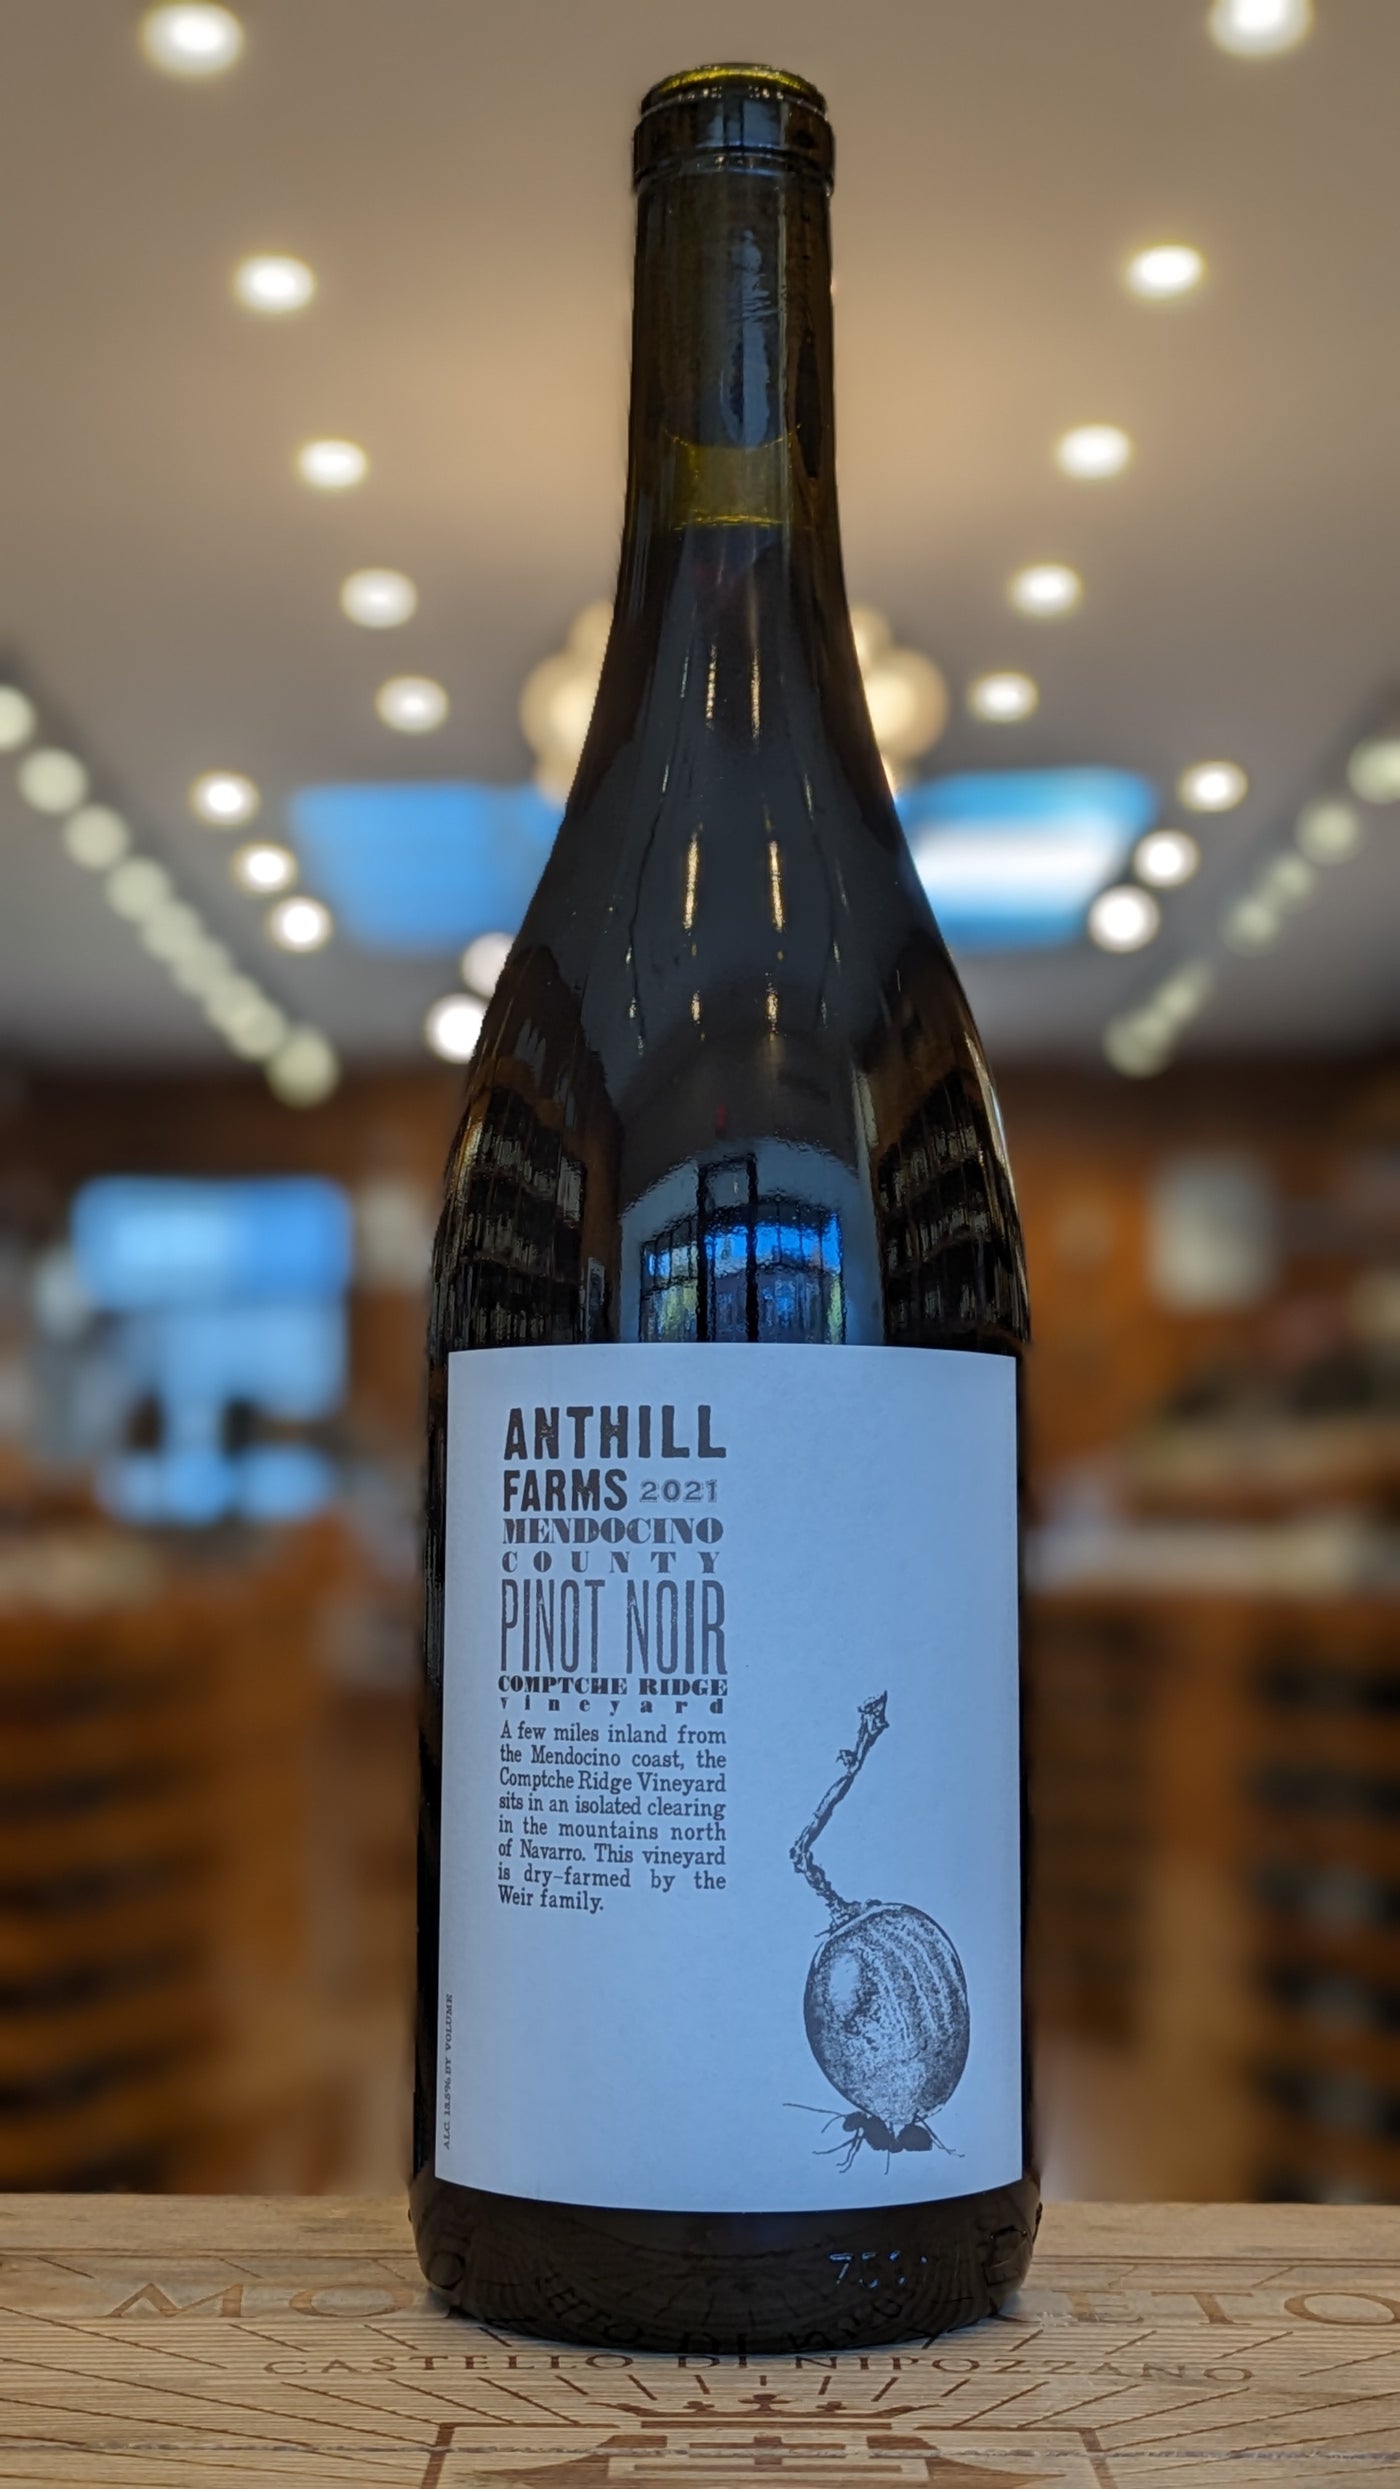 Anthill Farms Comptche Ridge Pinot Noir 2021